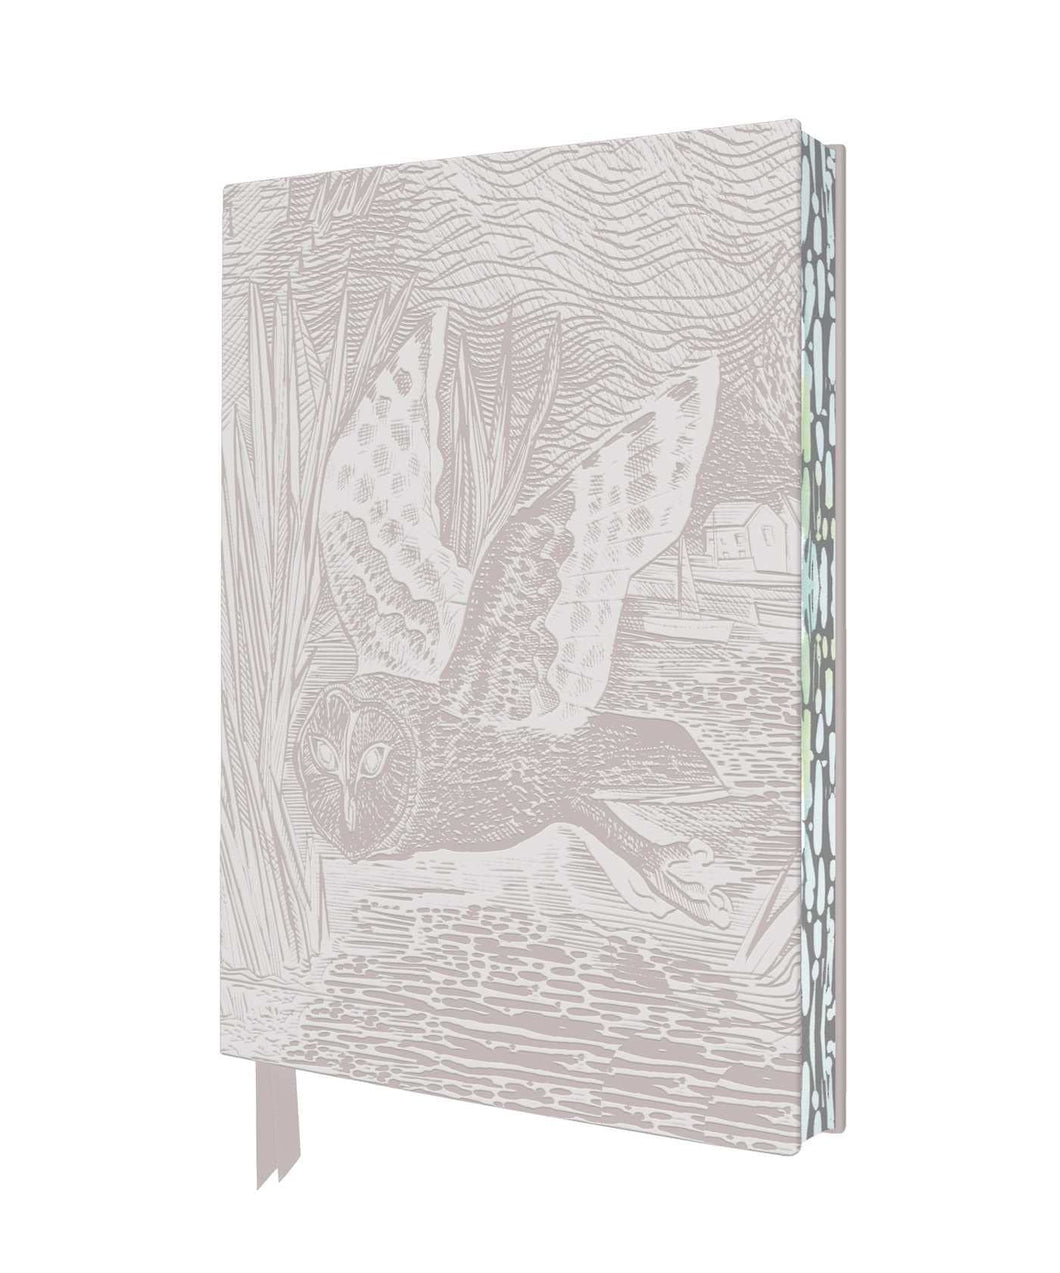 Angela Harding Marsh Owl Artisan Art Notebook